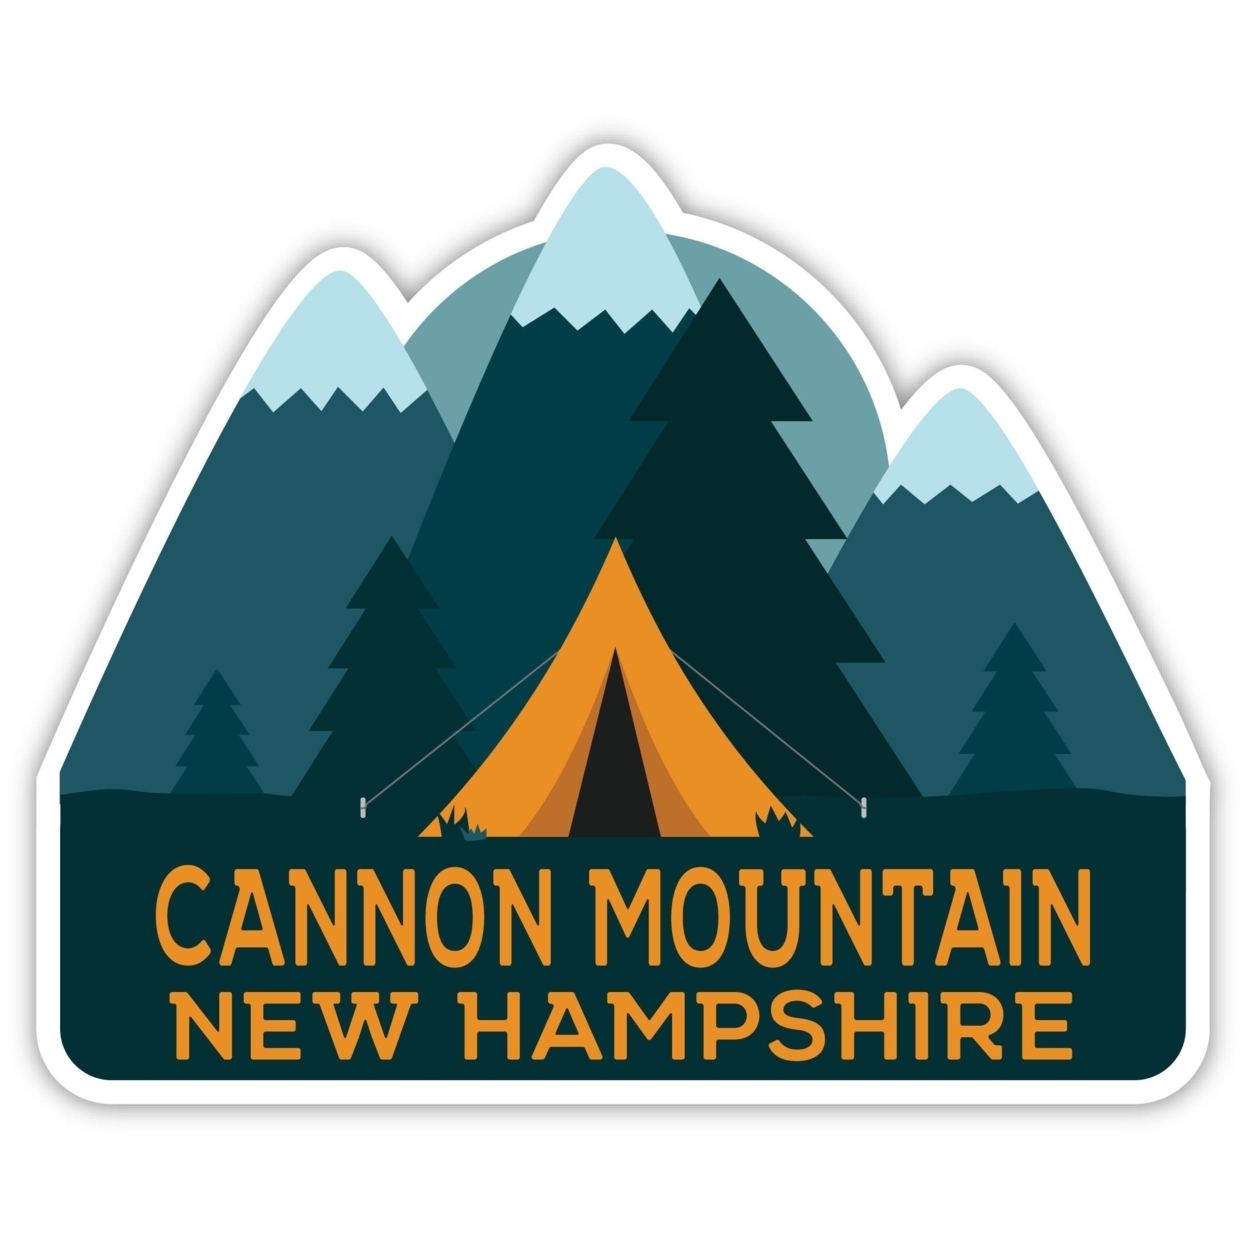 Cannon Mountain New Hampshire Souvenir Decorative Stickers (Choose Theme And Size) - Single Unit, 6-Inch, Tent